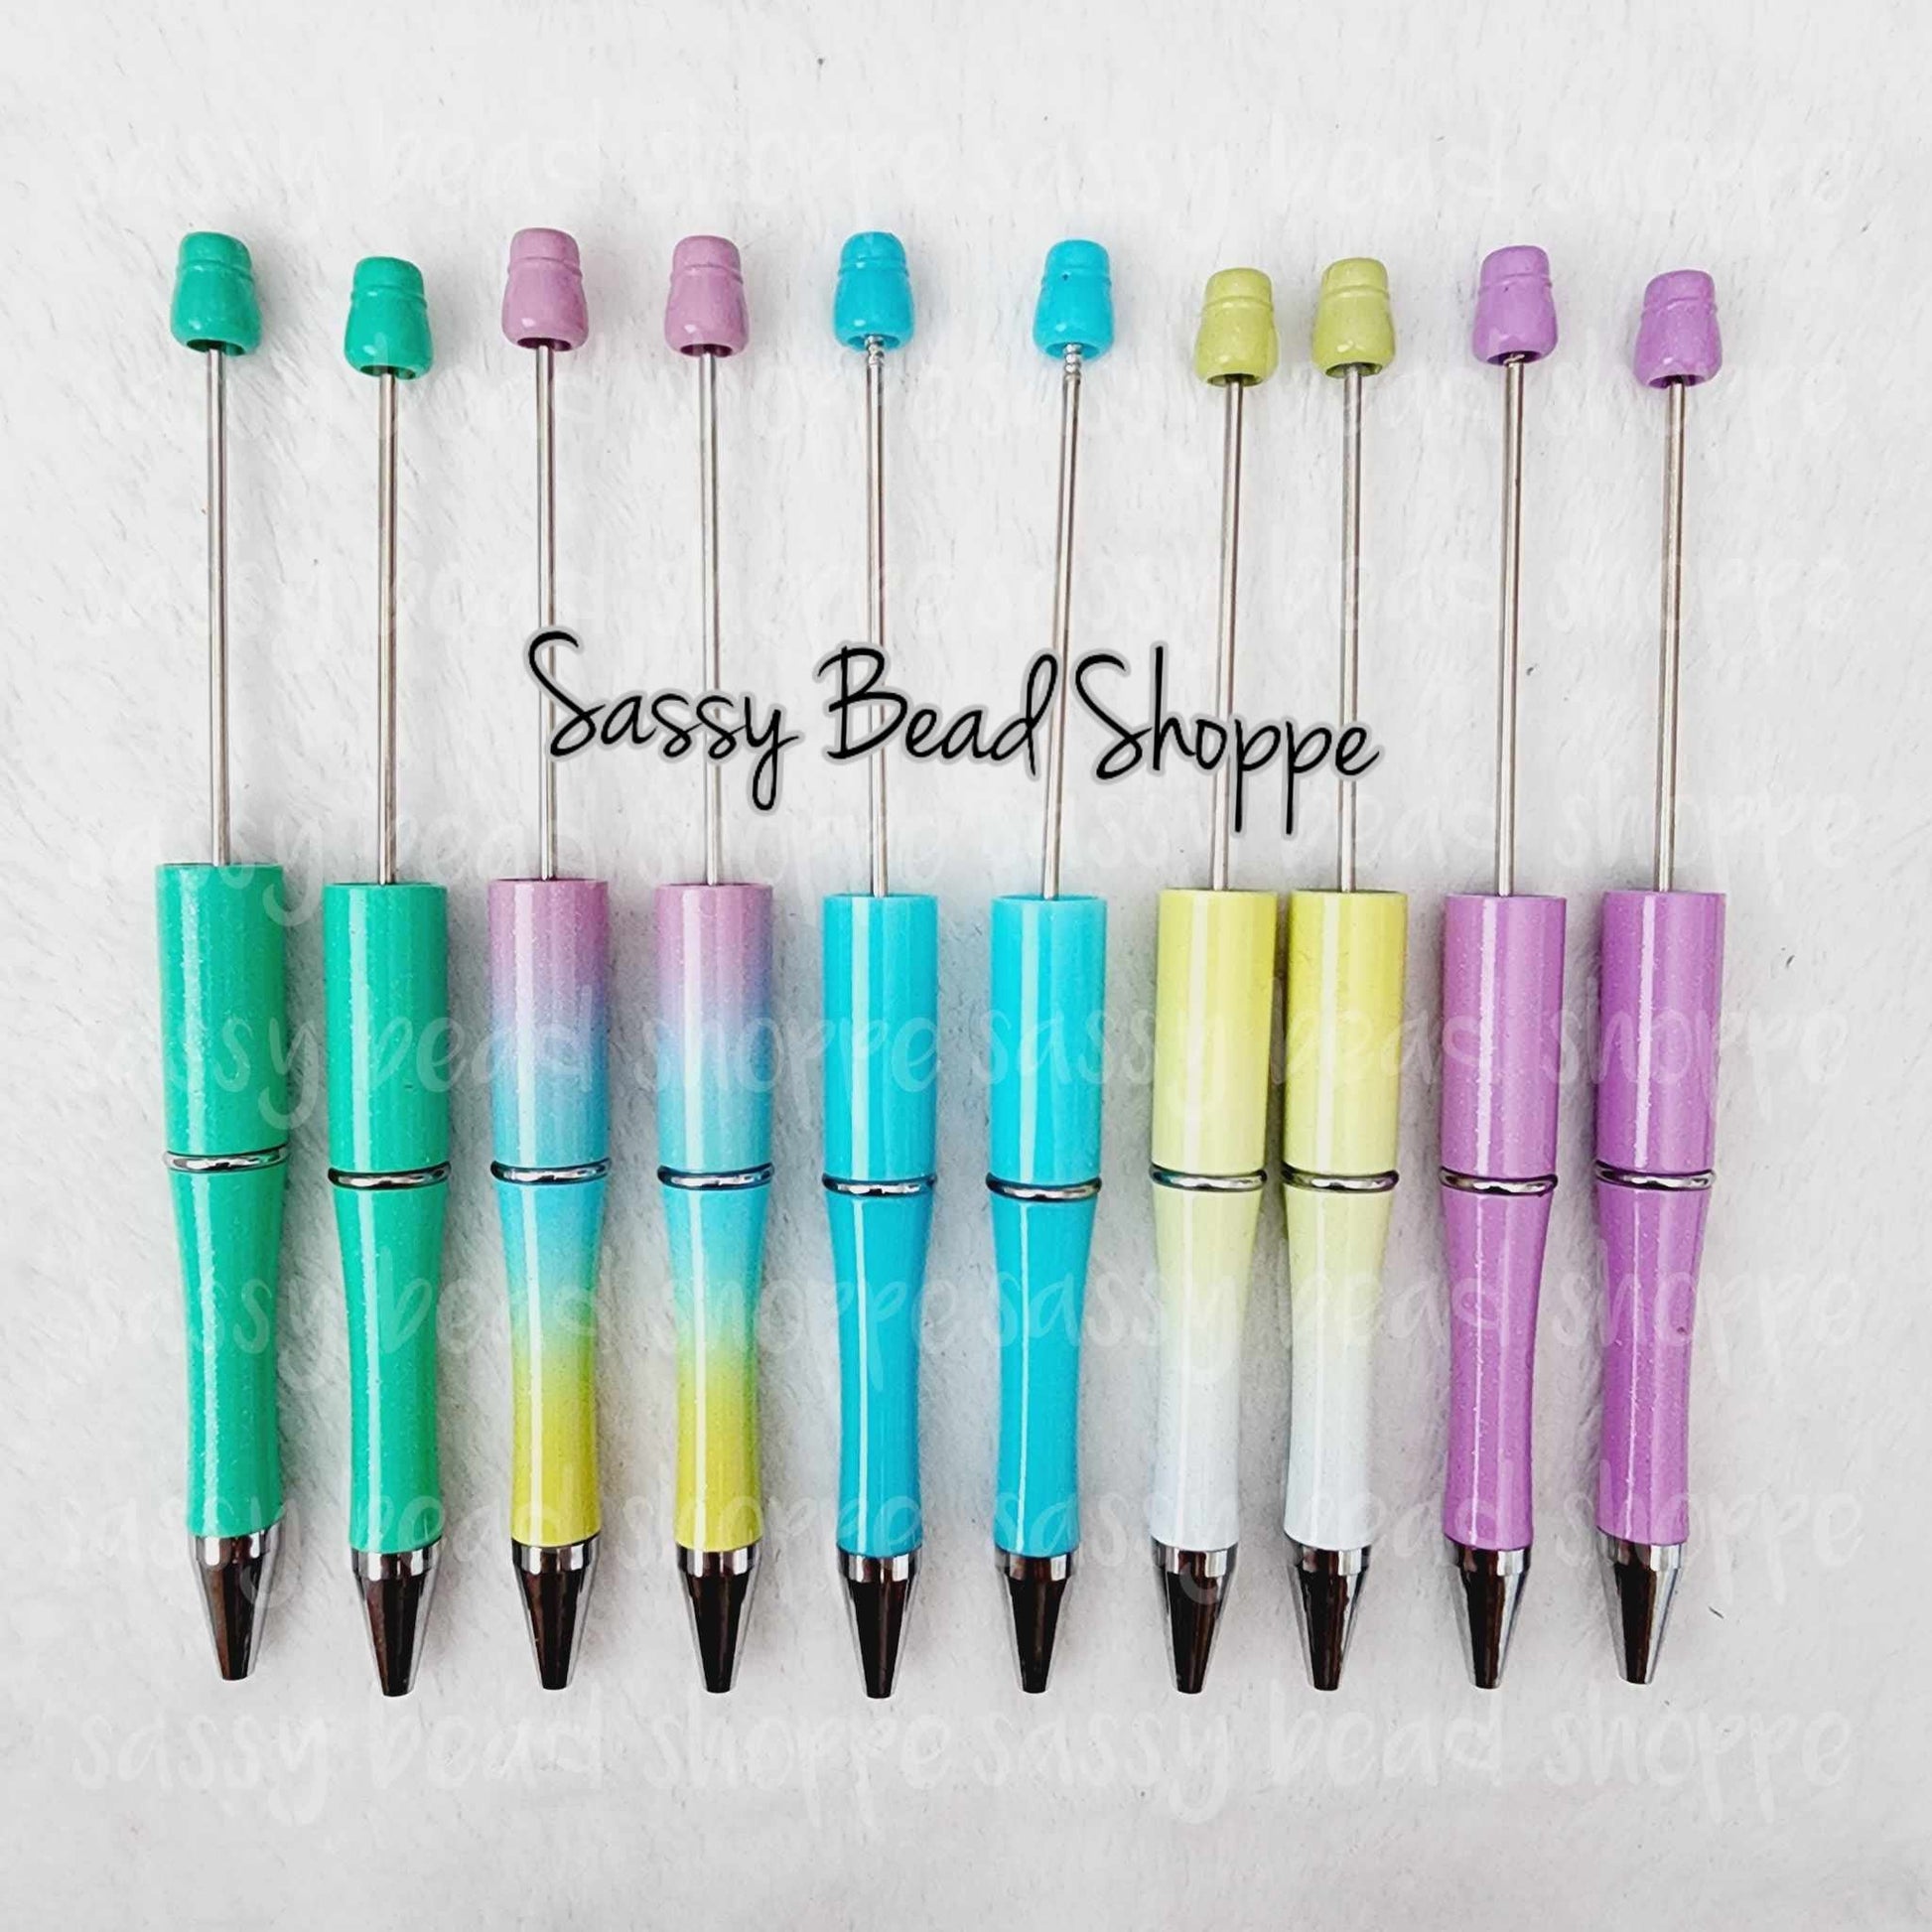 Sassy Bead Shoppe Beach Paradise Pen Pack Pack of 10